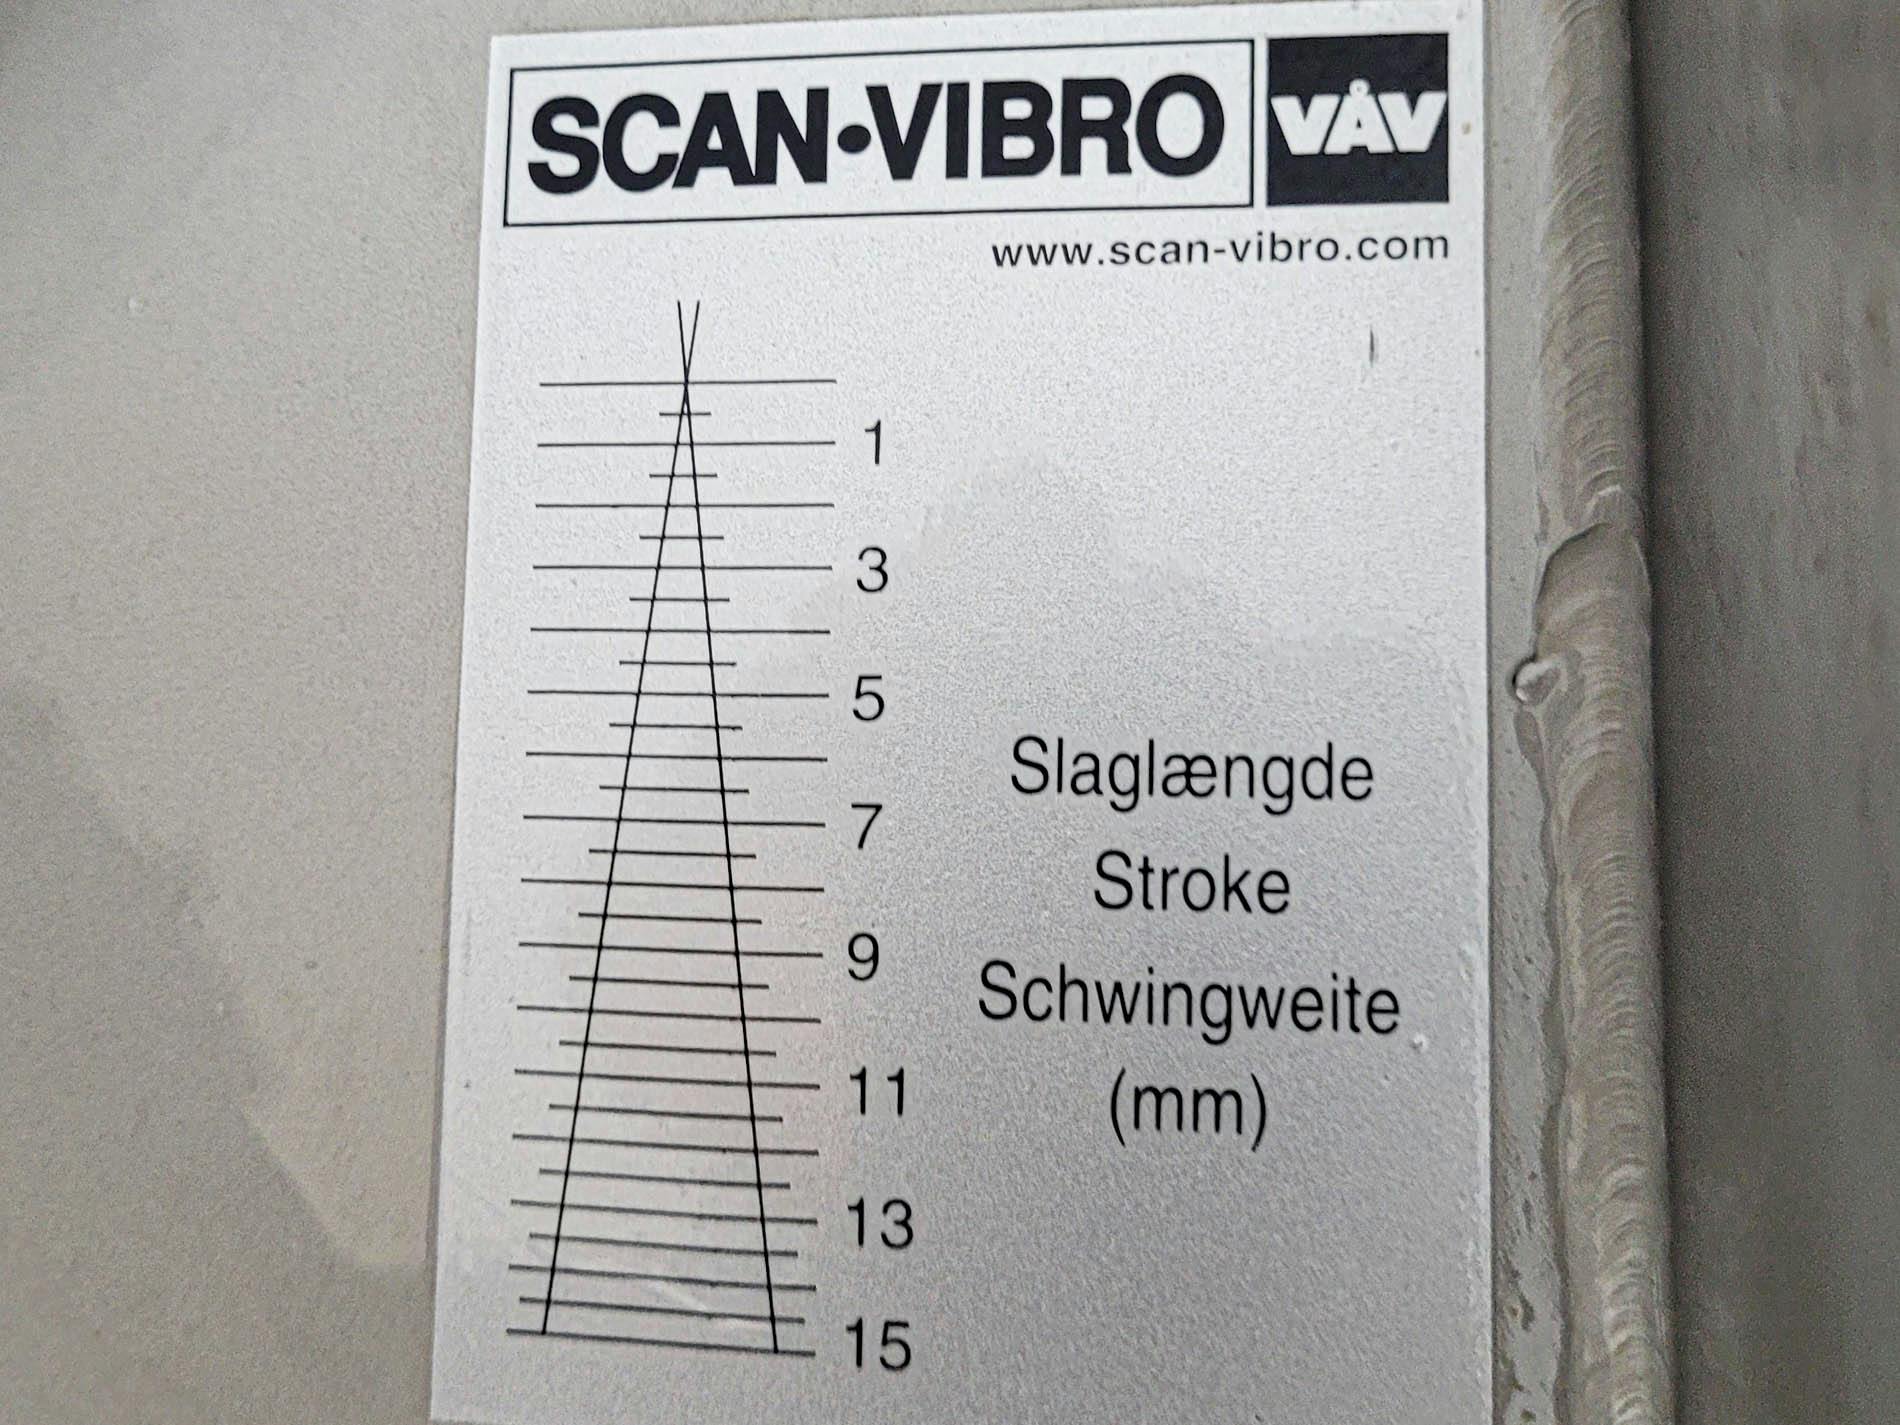 VAV Scan-Vibro TRS 300 x 1019 - Vibro feeder - image 10